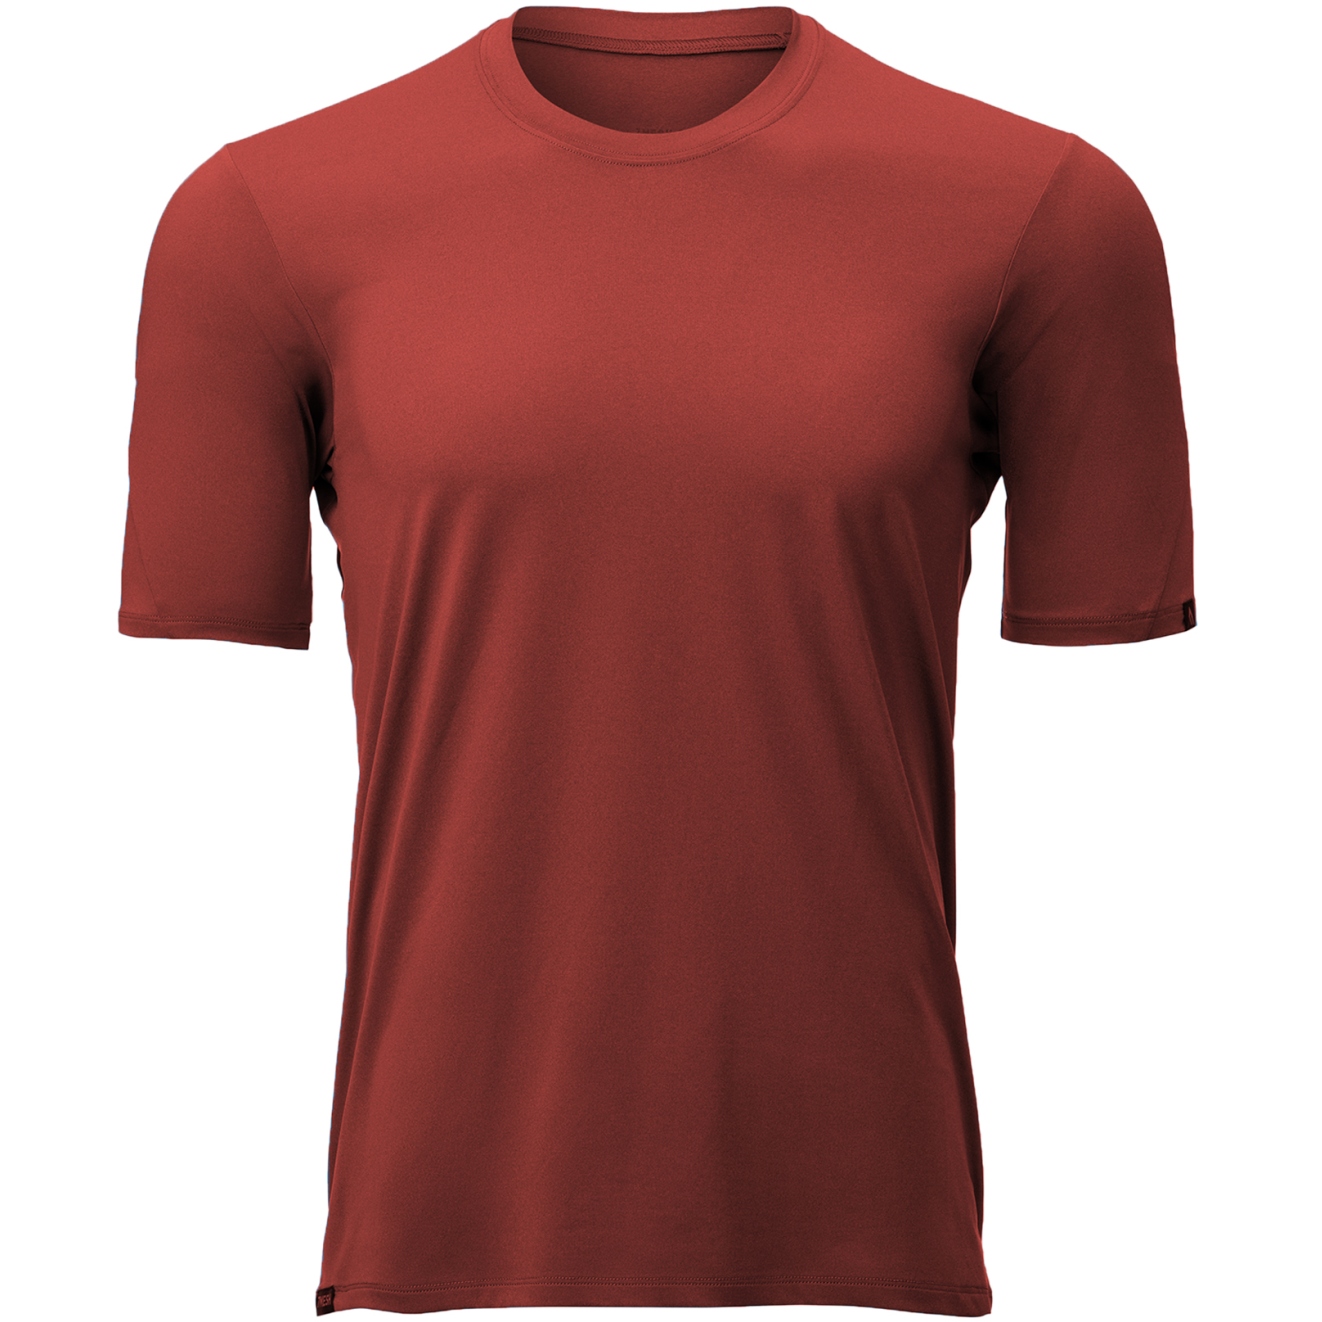 Picture of 7mesh Sight Short Sleeve Shirt Men - Redwood